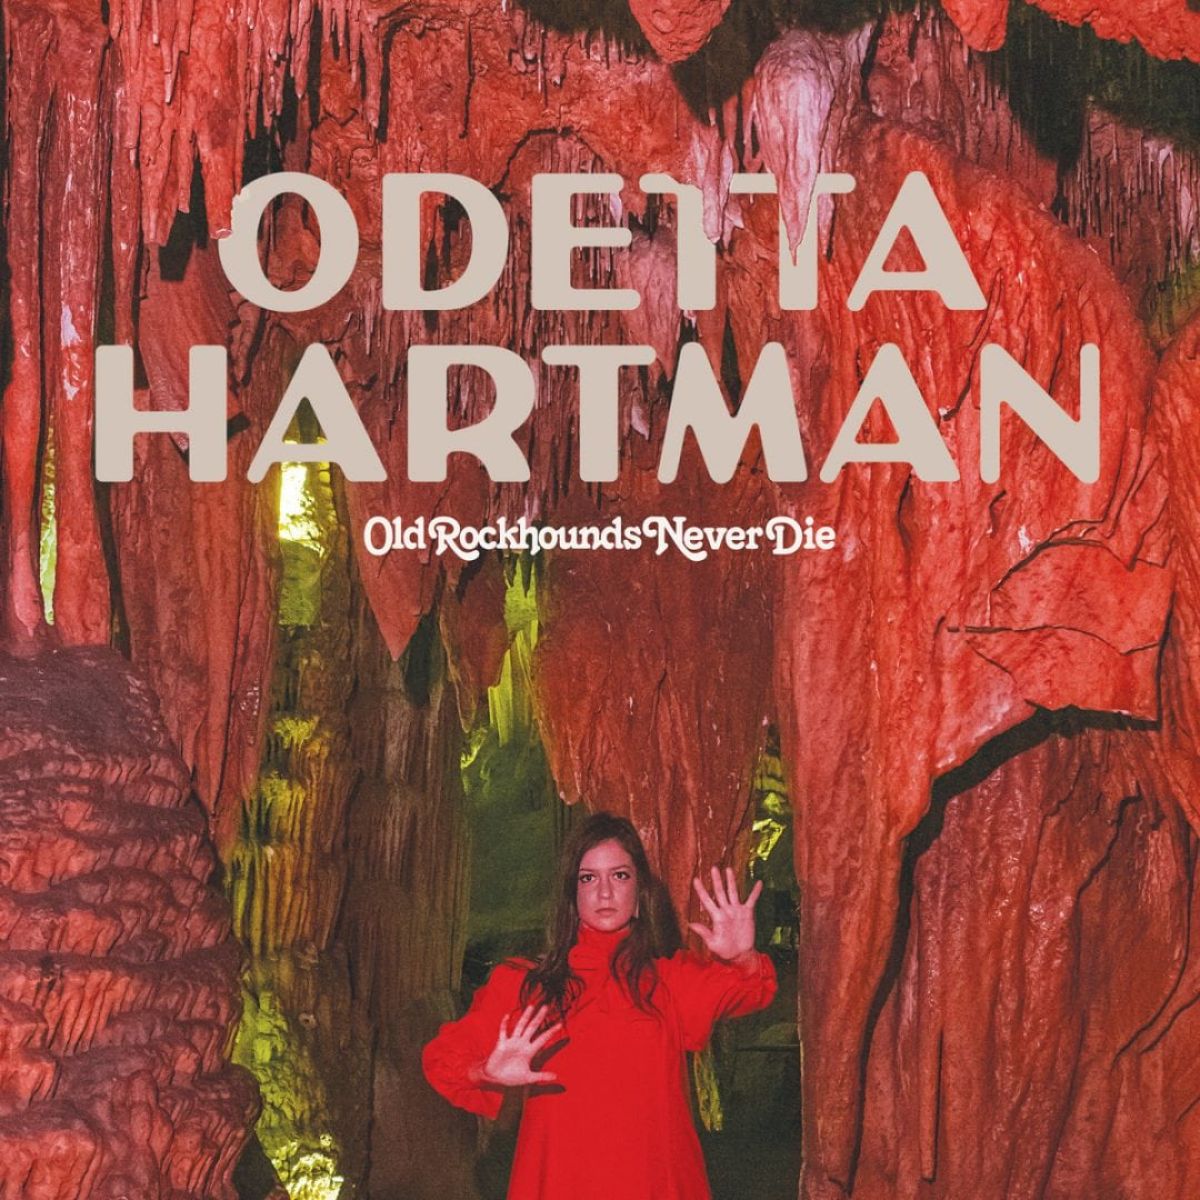 Hot Right Now: Odetta Hartman